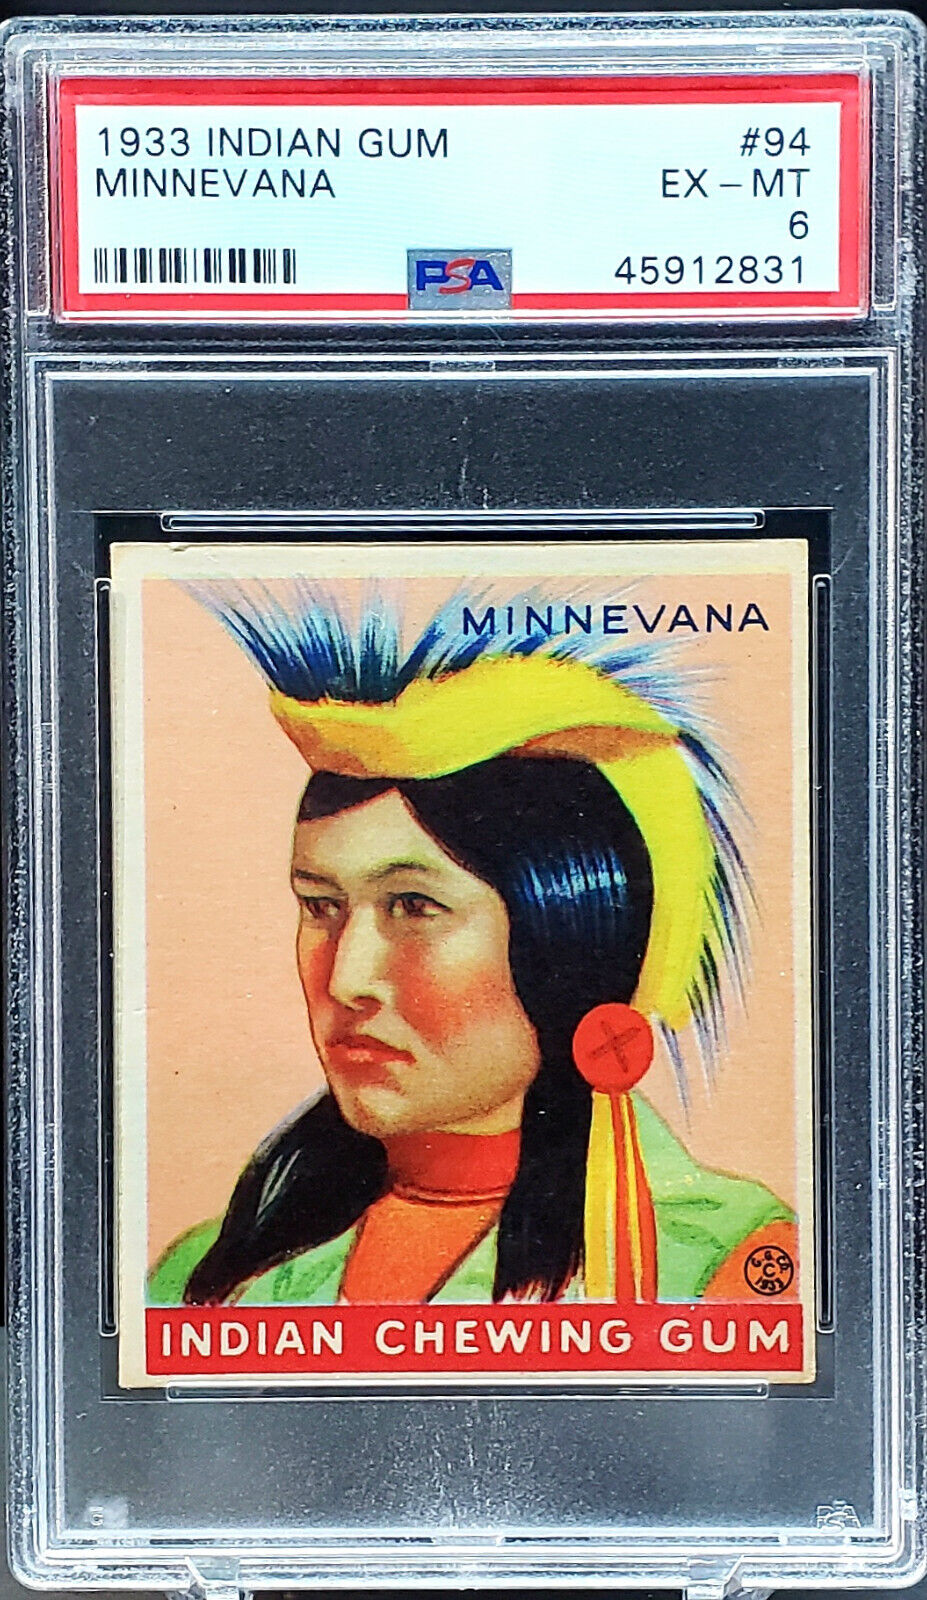 1933 R73 Goudey Indian Gum Card - #94 - MINNEVANA - Series 264 - PSA 6 - NICE